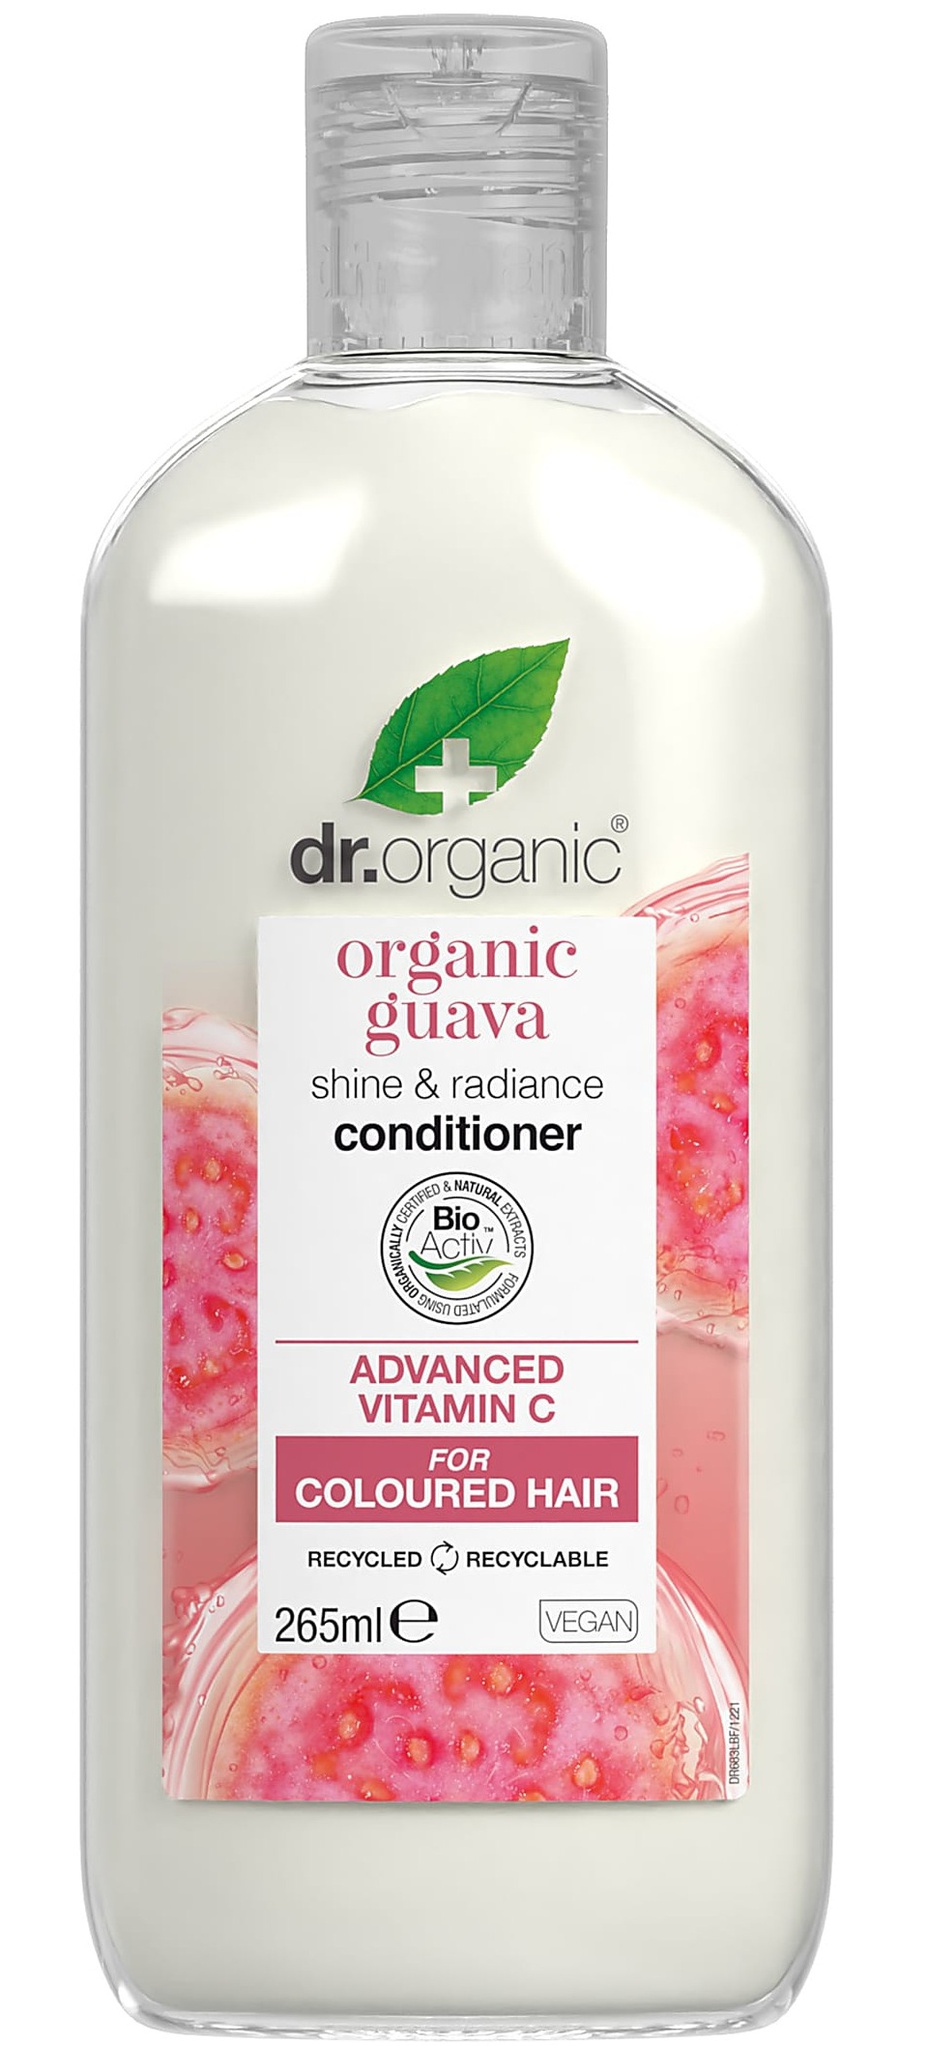 Dr Organic Guava Conditioner